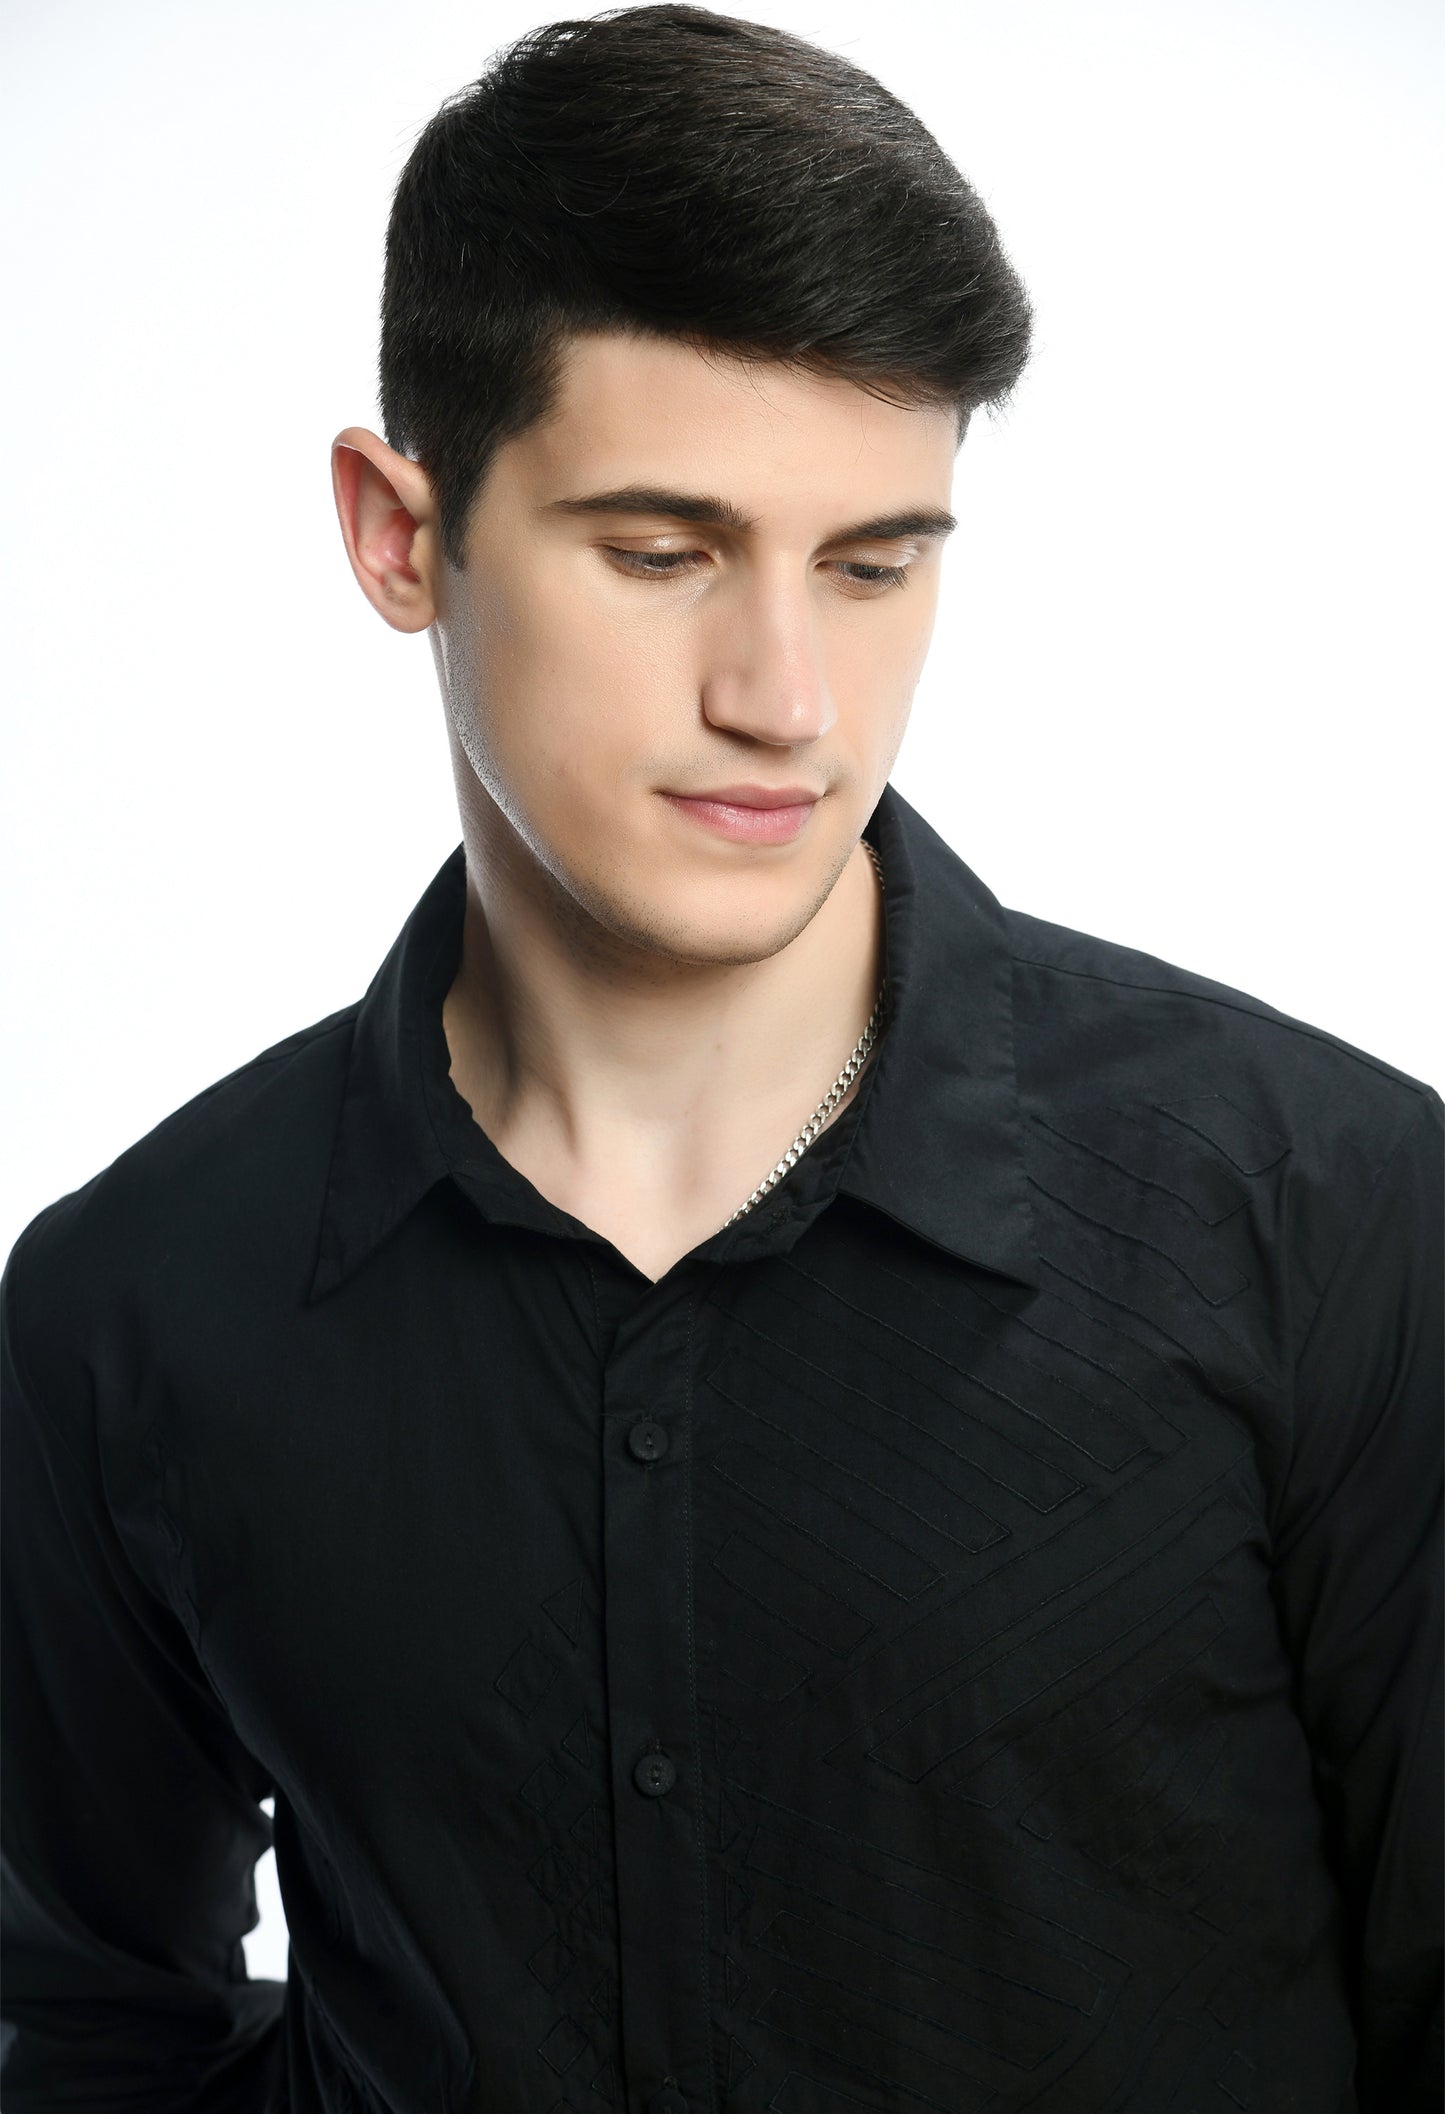 A black cotton shirt showcasing tone on tone appliqué work